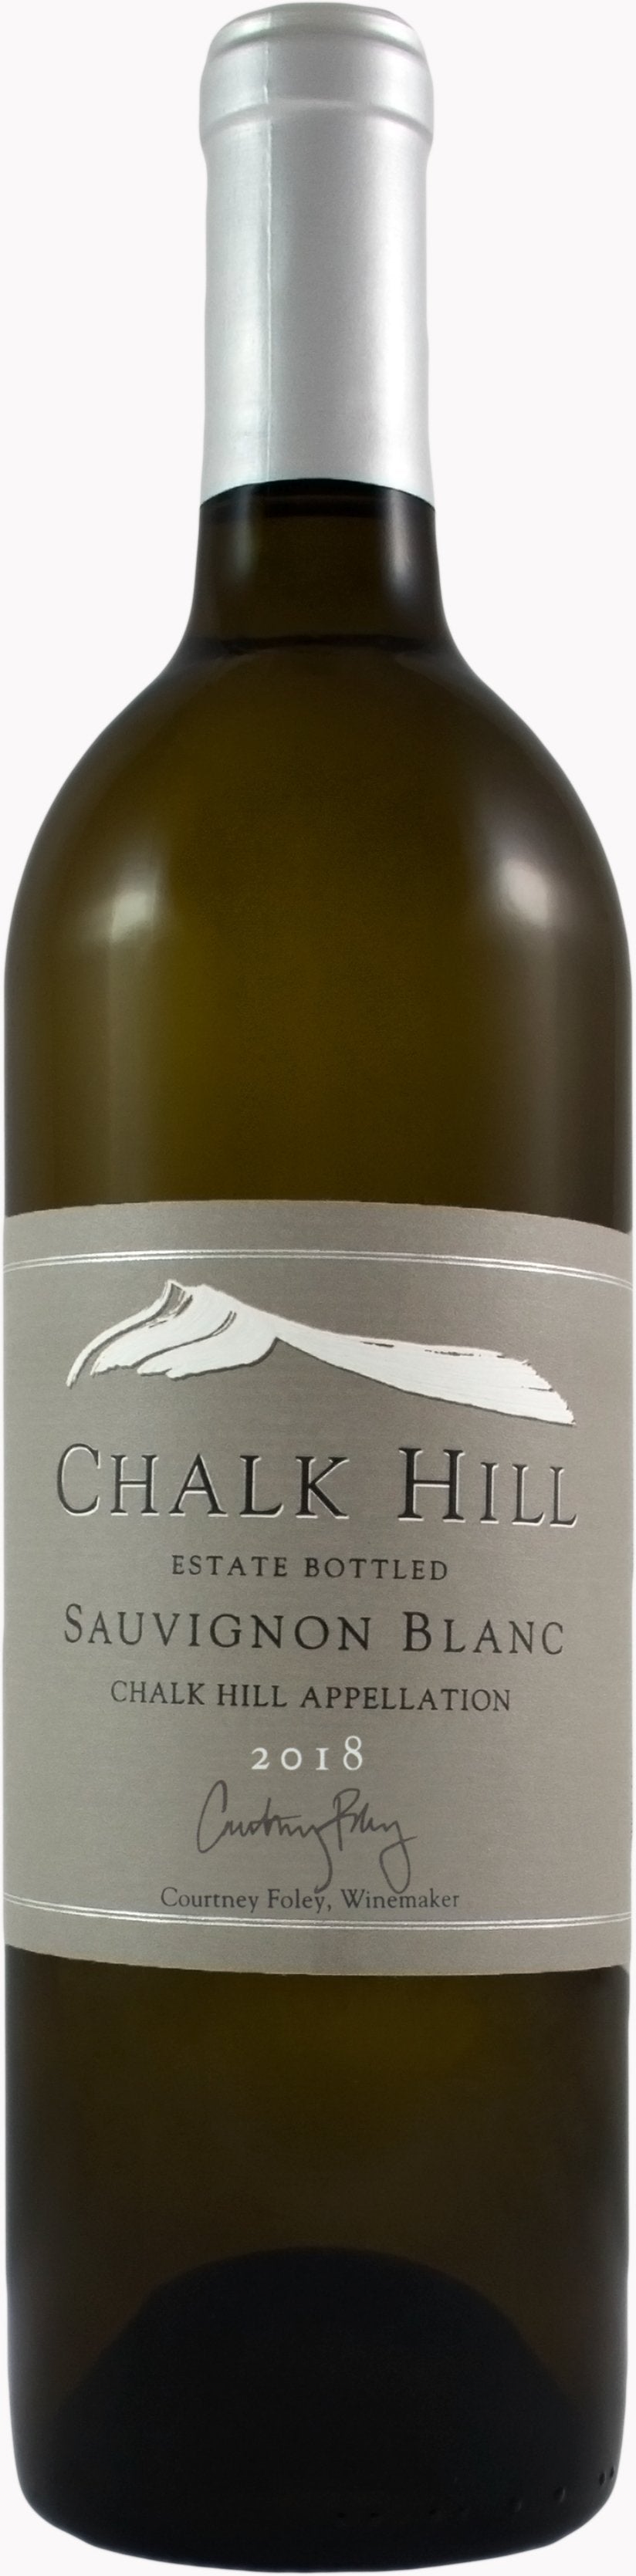 Chalk Hill Sauvignon Blanc 2018